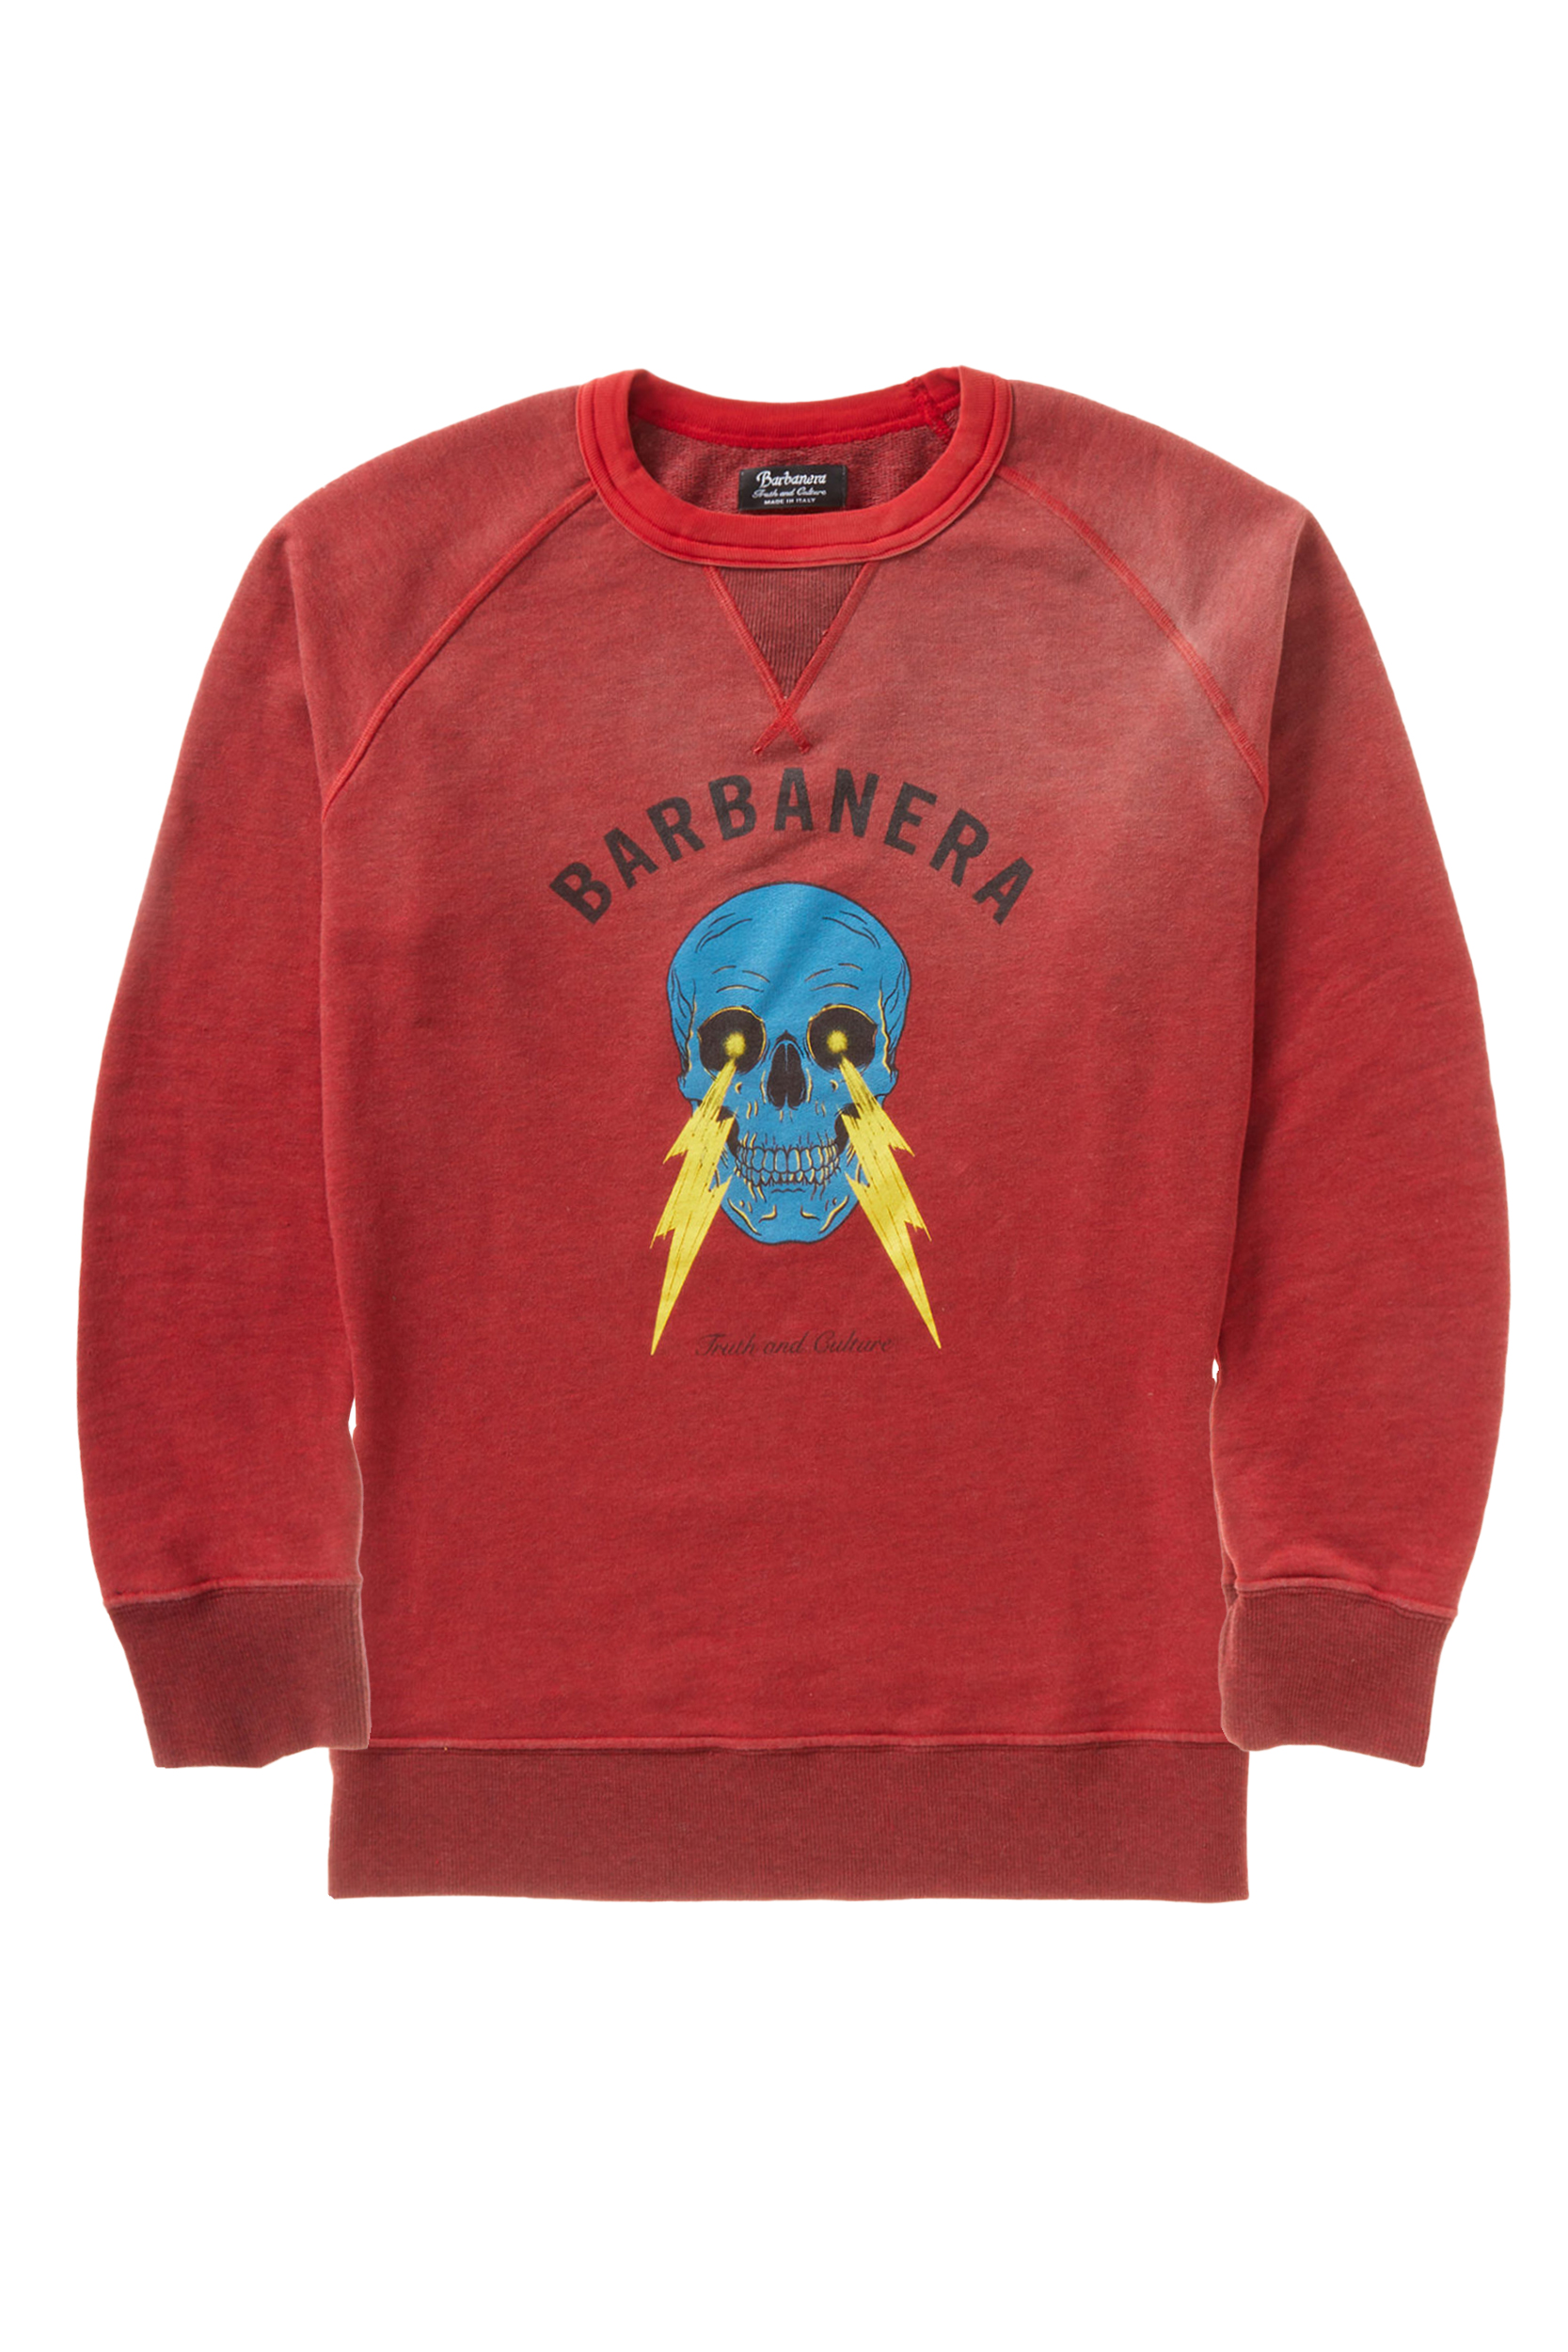 Meroni Vintage Graphic Cotton Crew Bolt - Skull And Neck Barbanera Lightning Red Sweatshirt